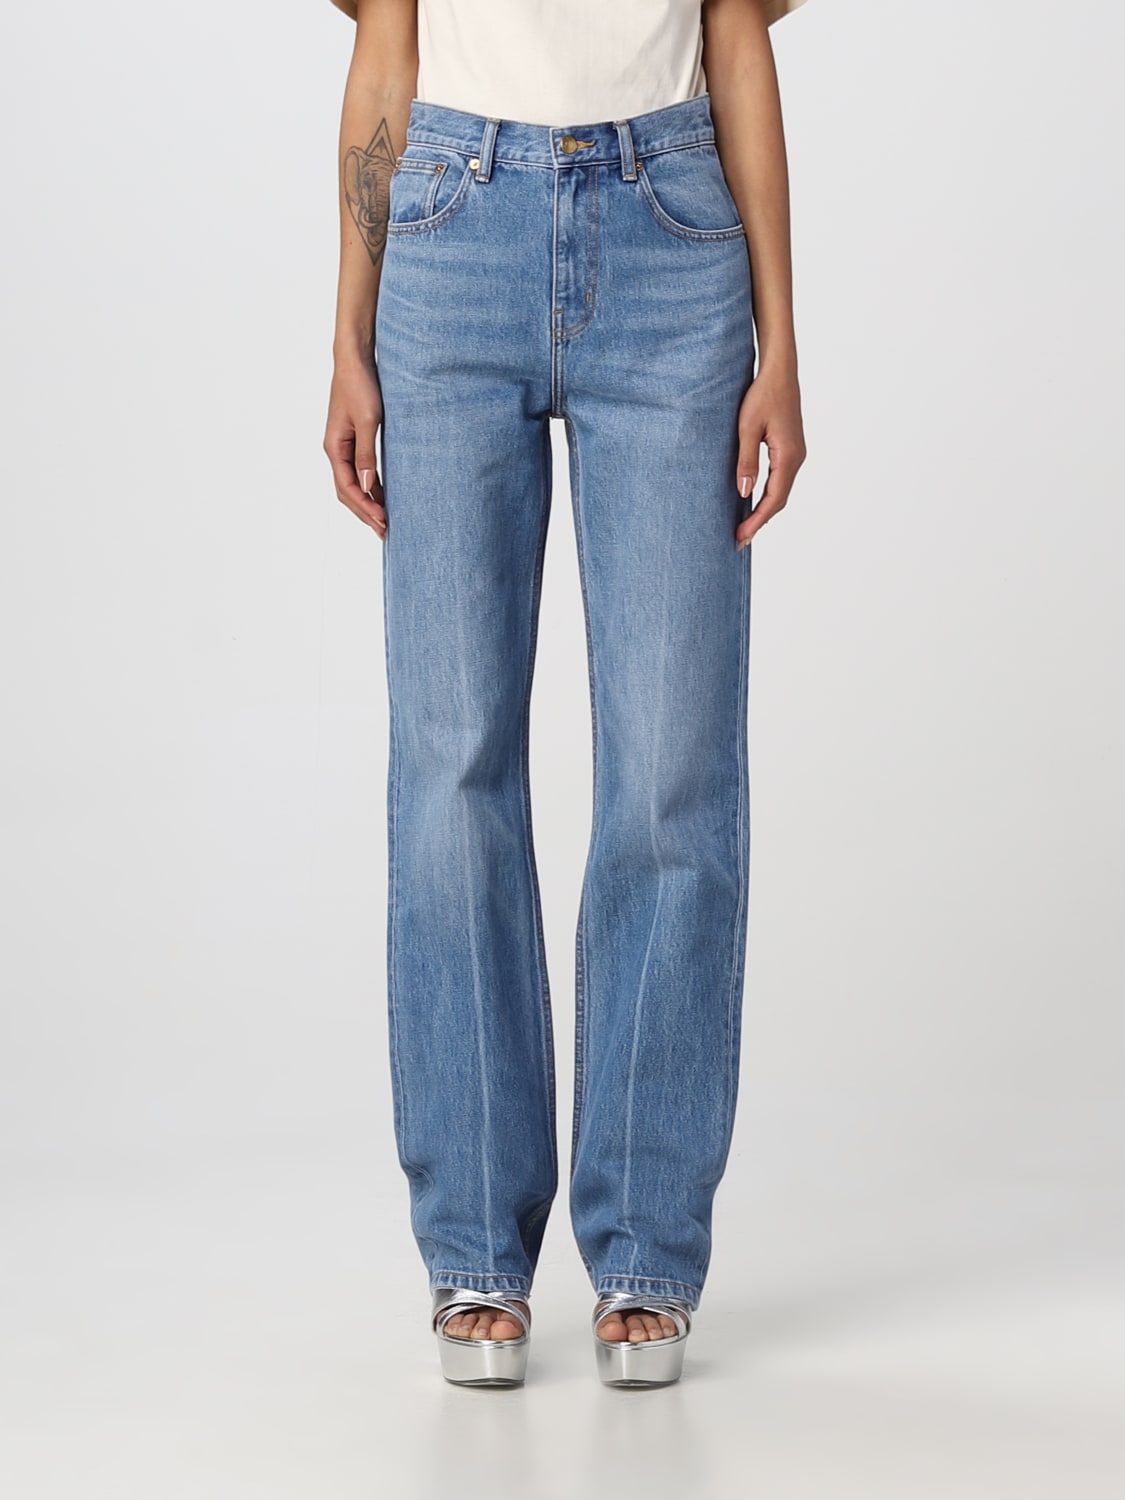 Tory Burch Outlet: denim jeans - Denim | Tory Burch jeans 147338